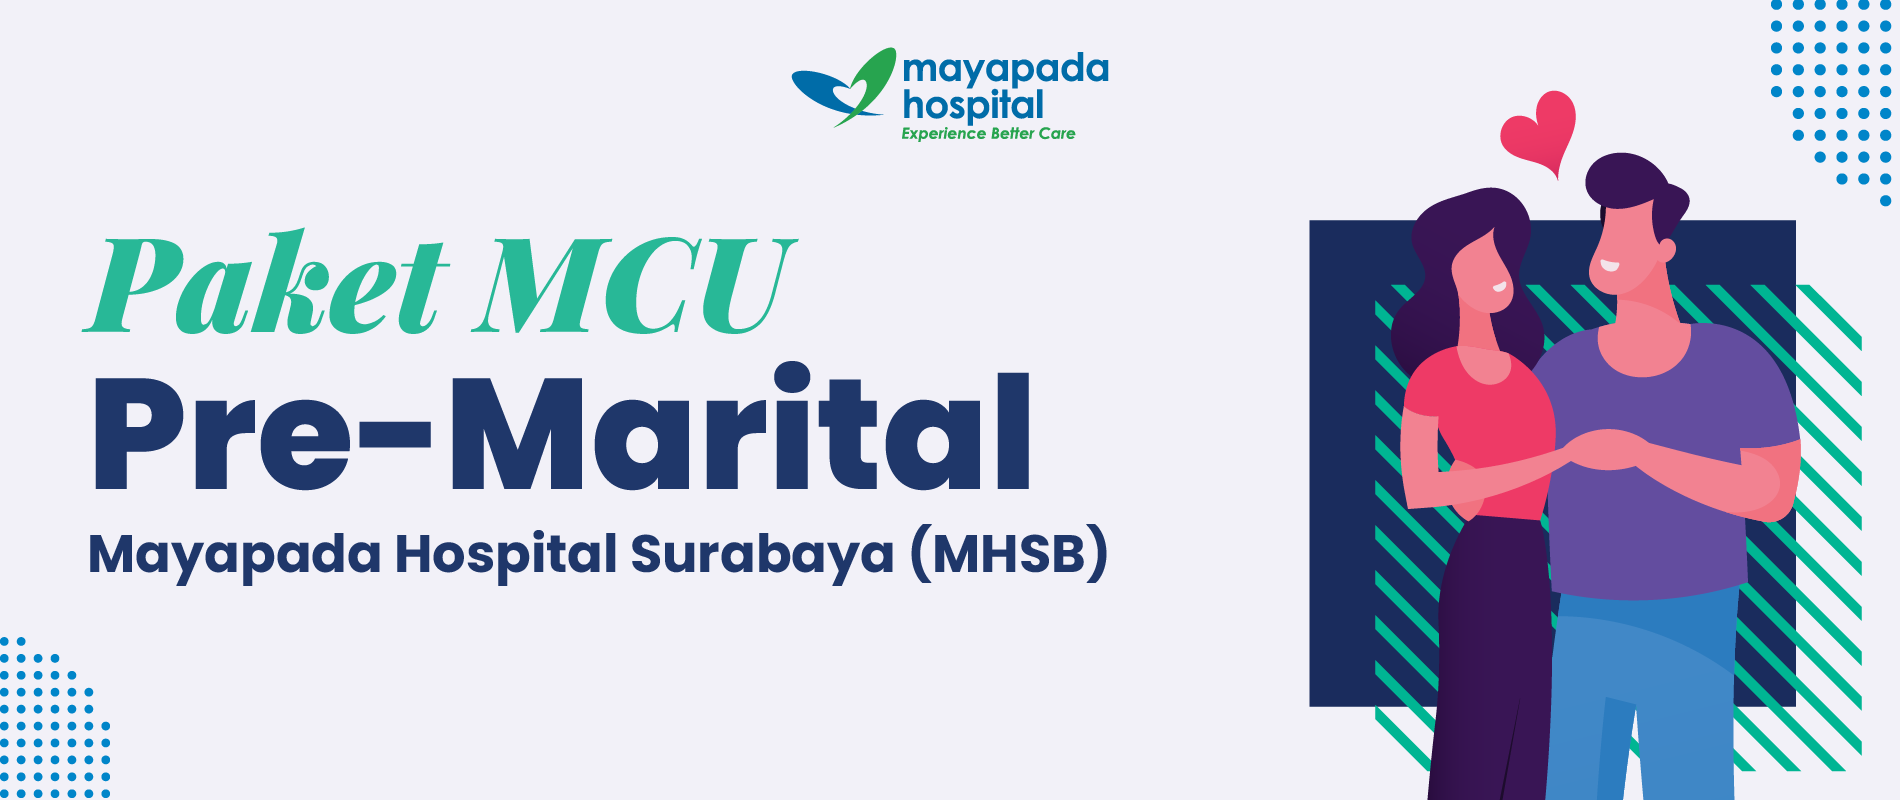 Paket Medical Check Up Pre-Marital di Mayapada Hospital Surabaya (MHSB) IMG